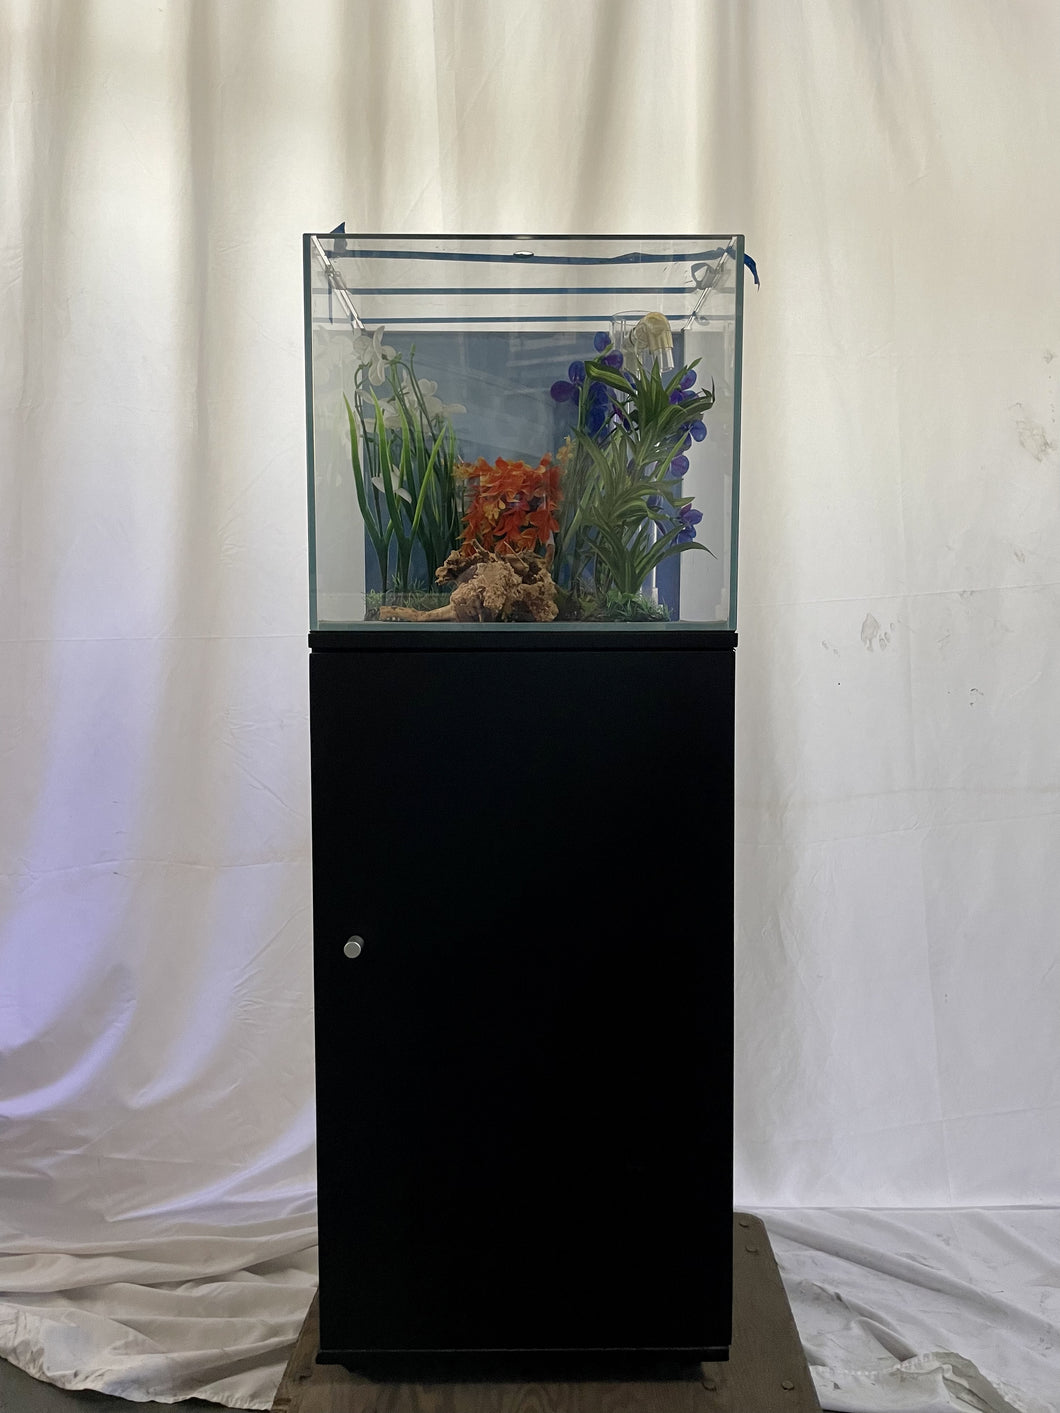 ULTRA CLEAR GLASS - 18 gallon cube fish tank aquarium full setup w/ filtration